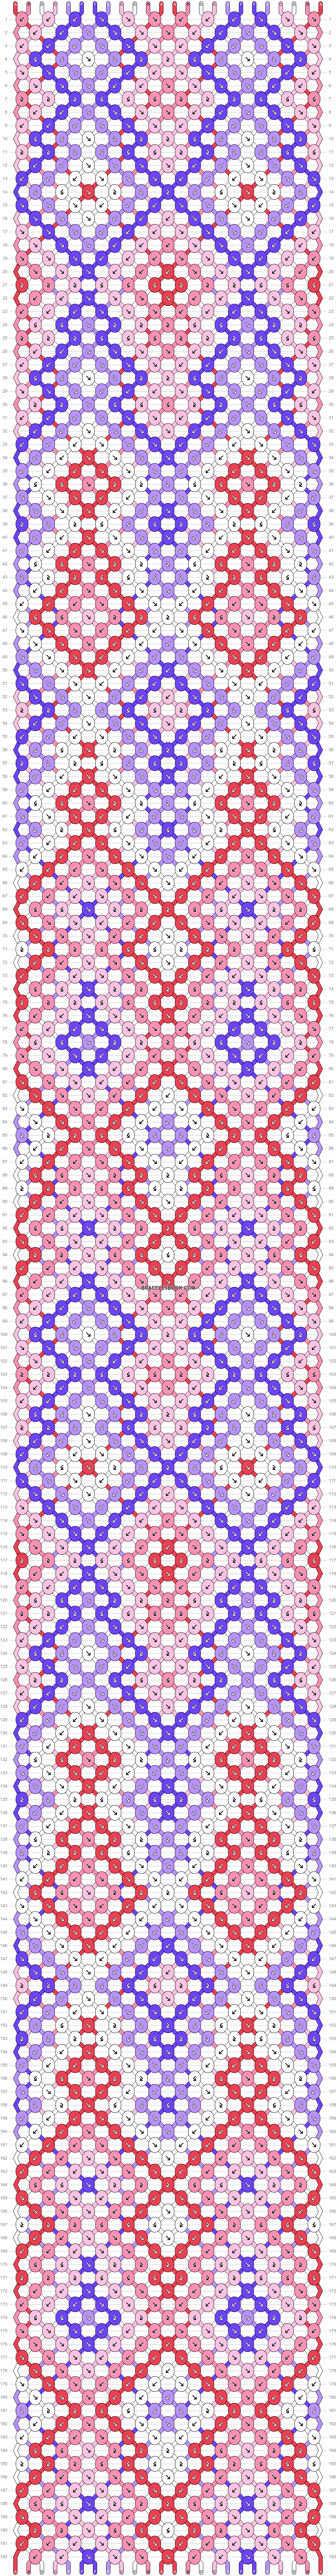 Normal pattern #47931 pattern